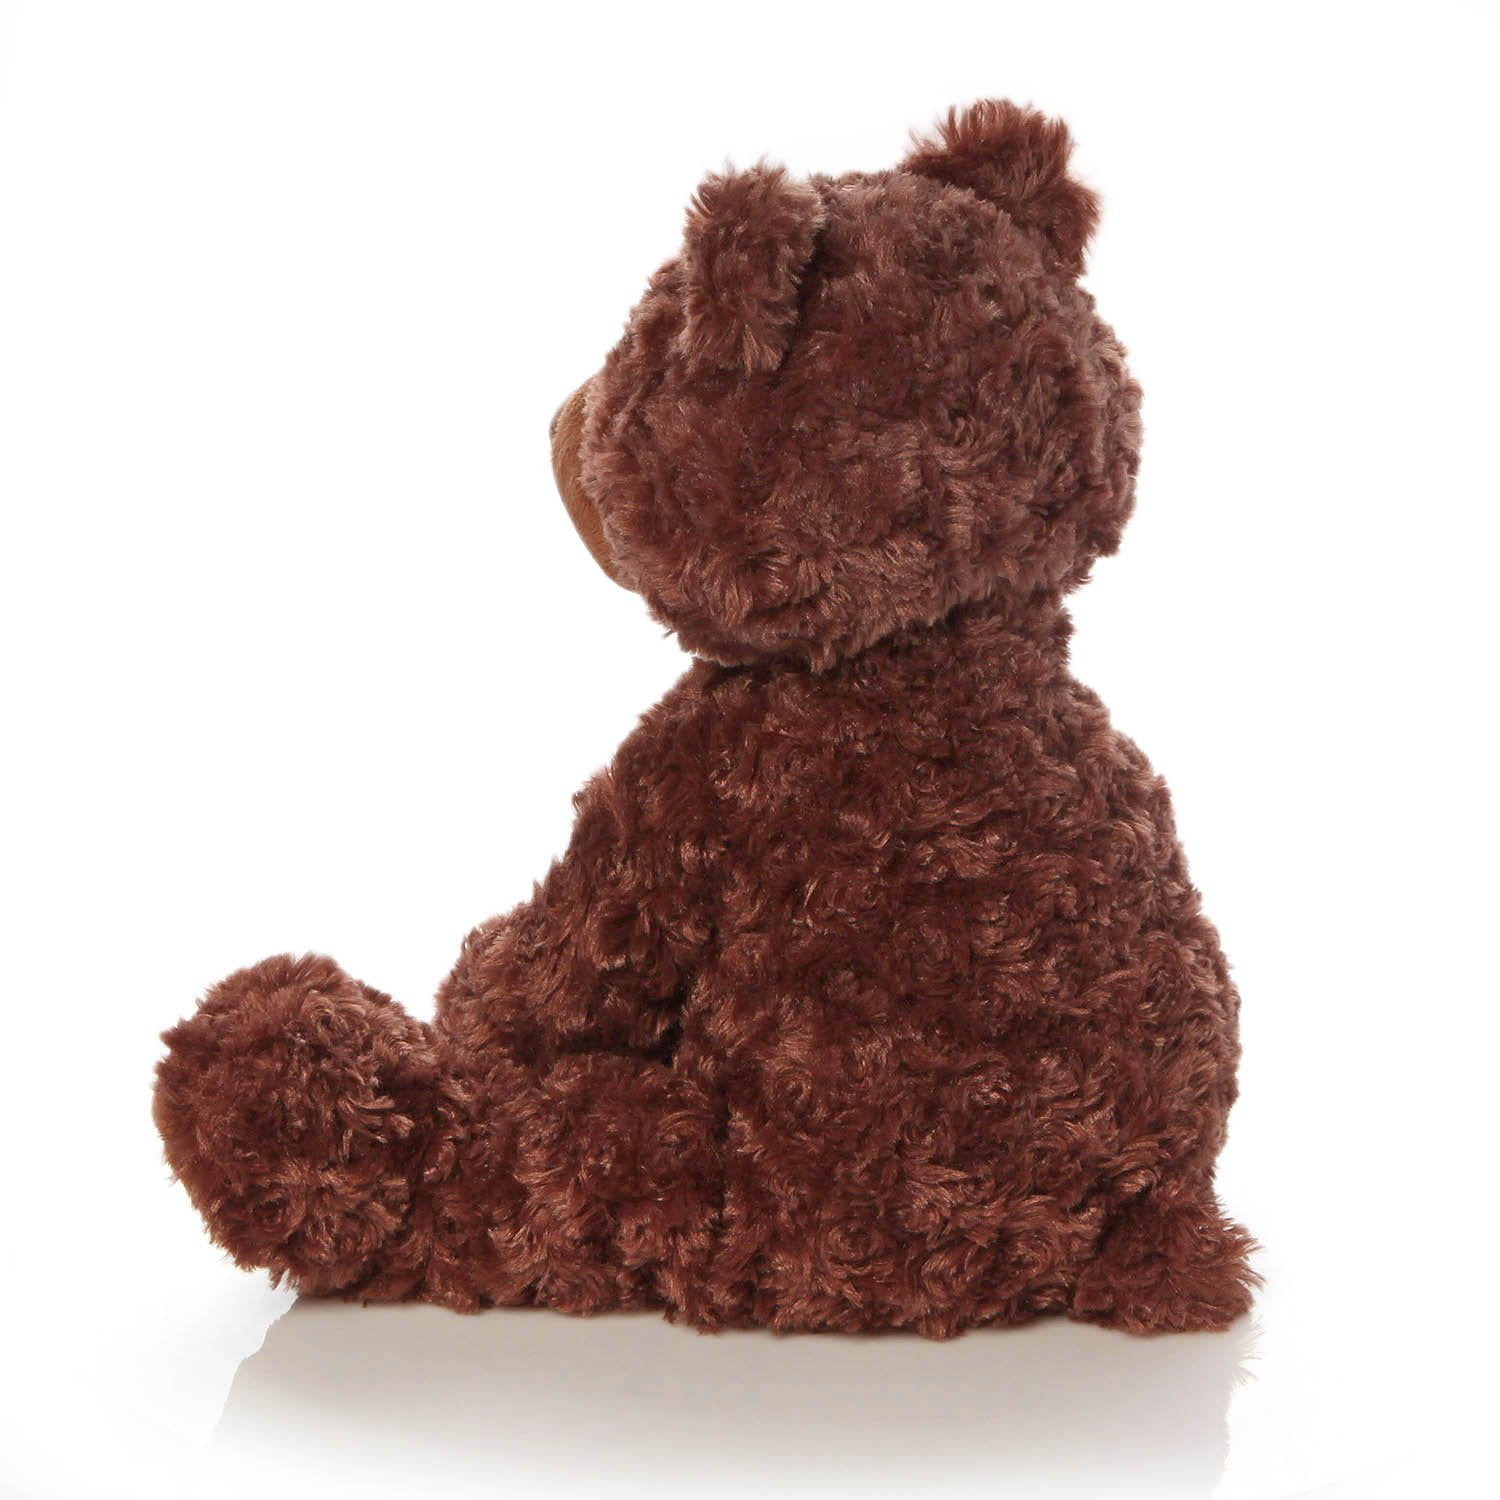 Chocolate Teddy Bear GUND Philbin 12 for sale online 